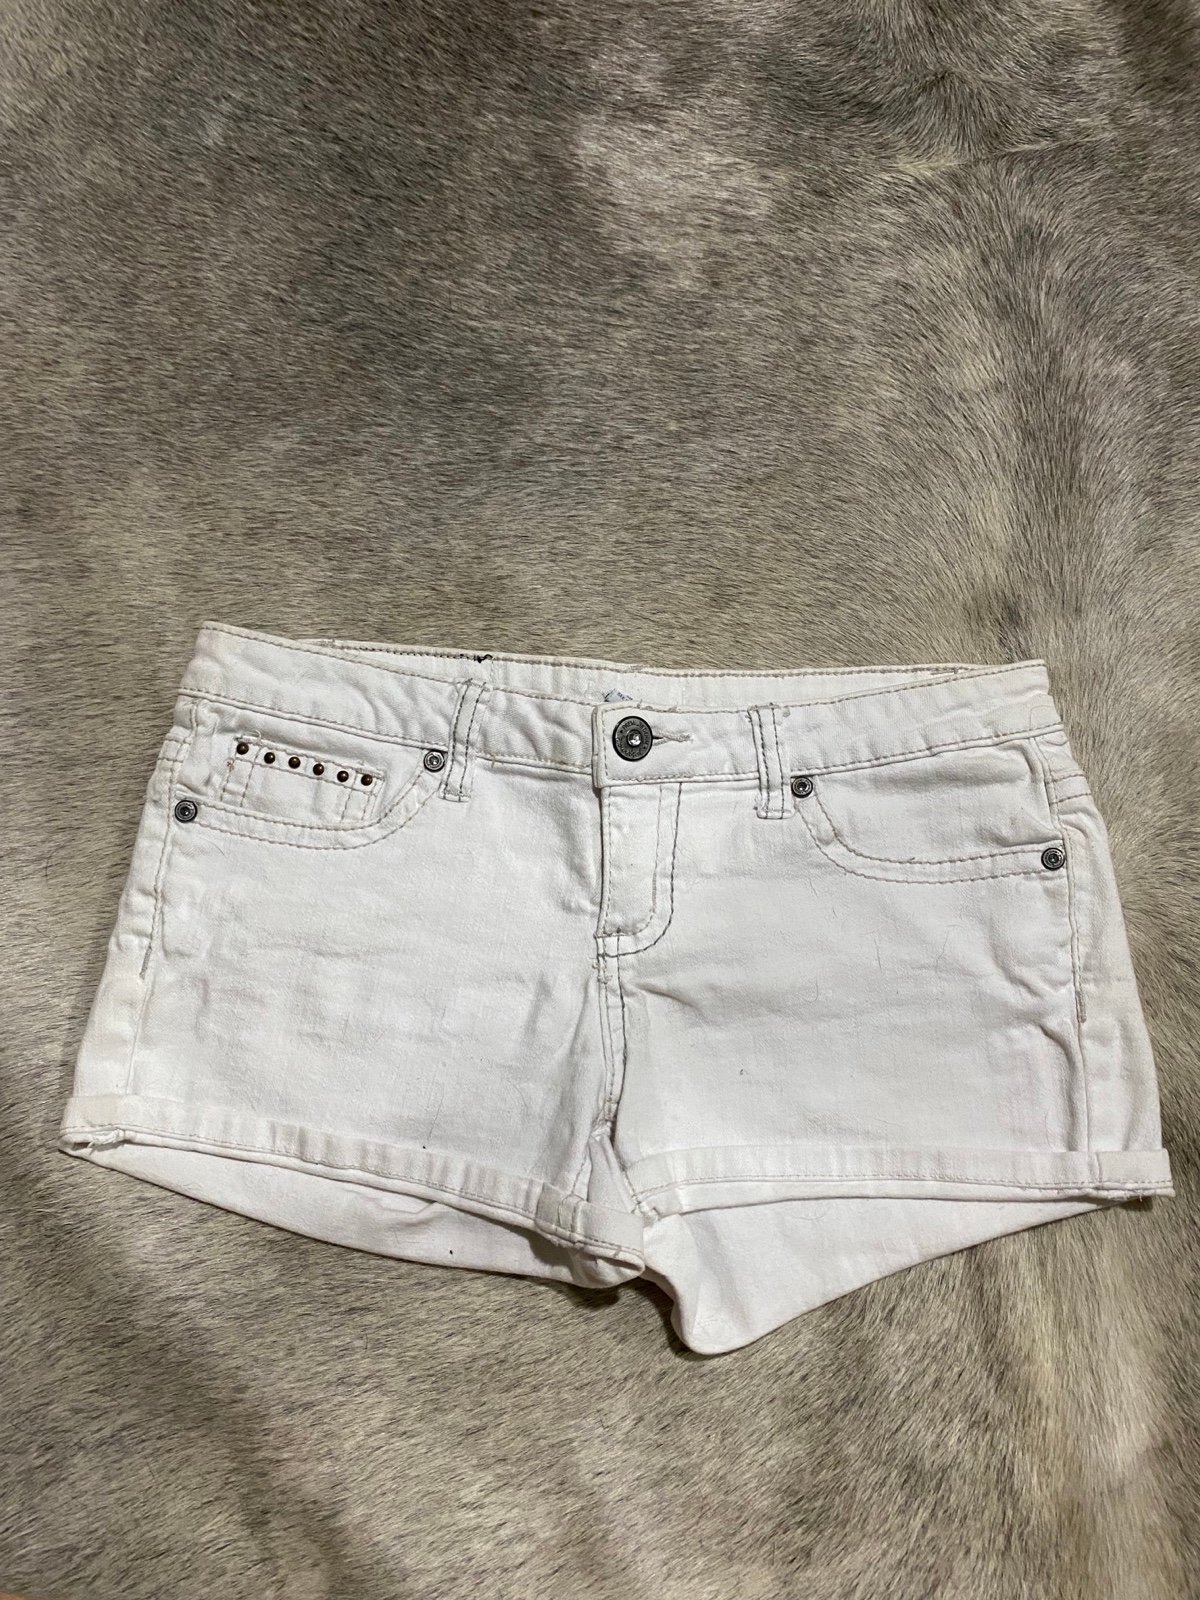 big discount Women’s white shorts size 7 M0SDLi9kf Factory Price